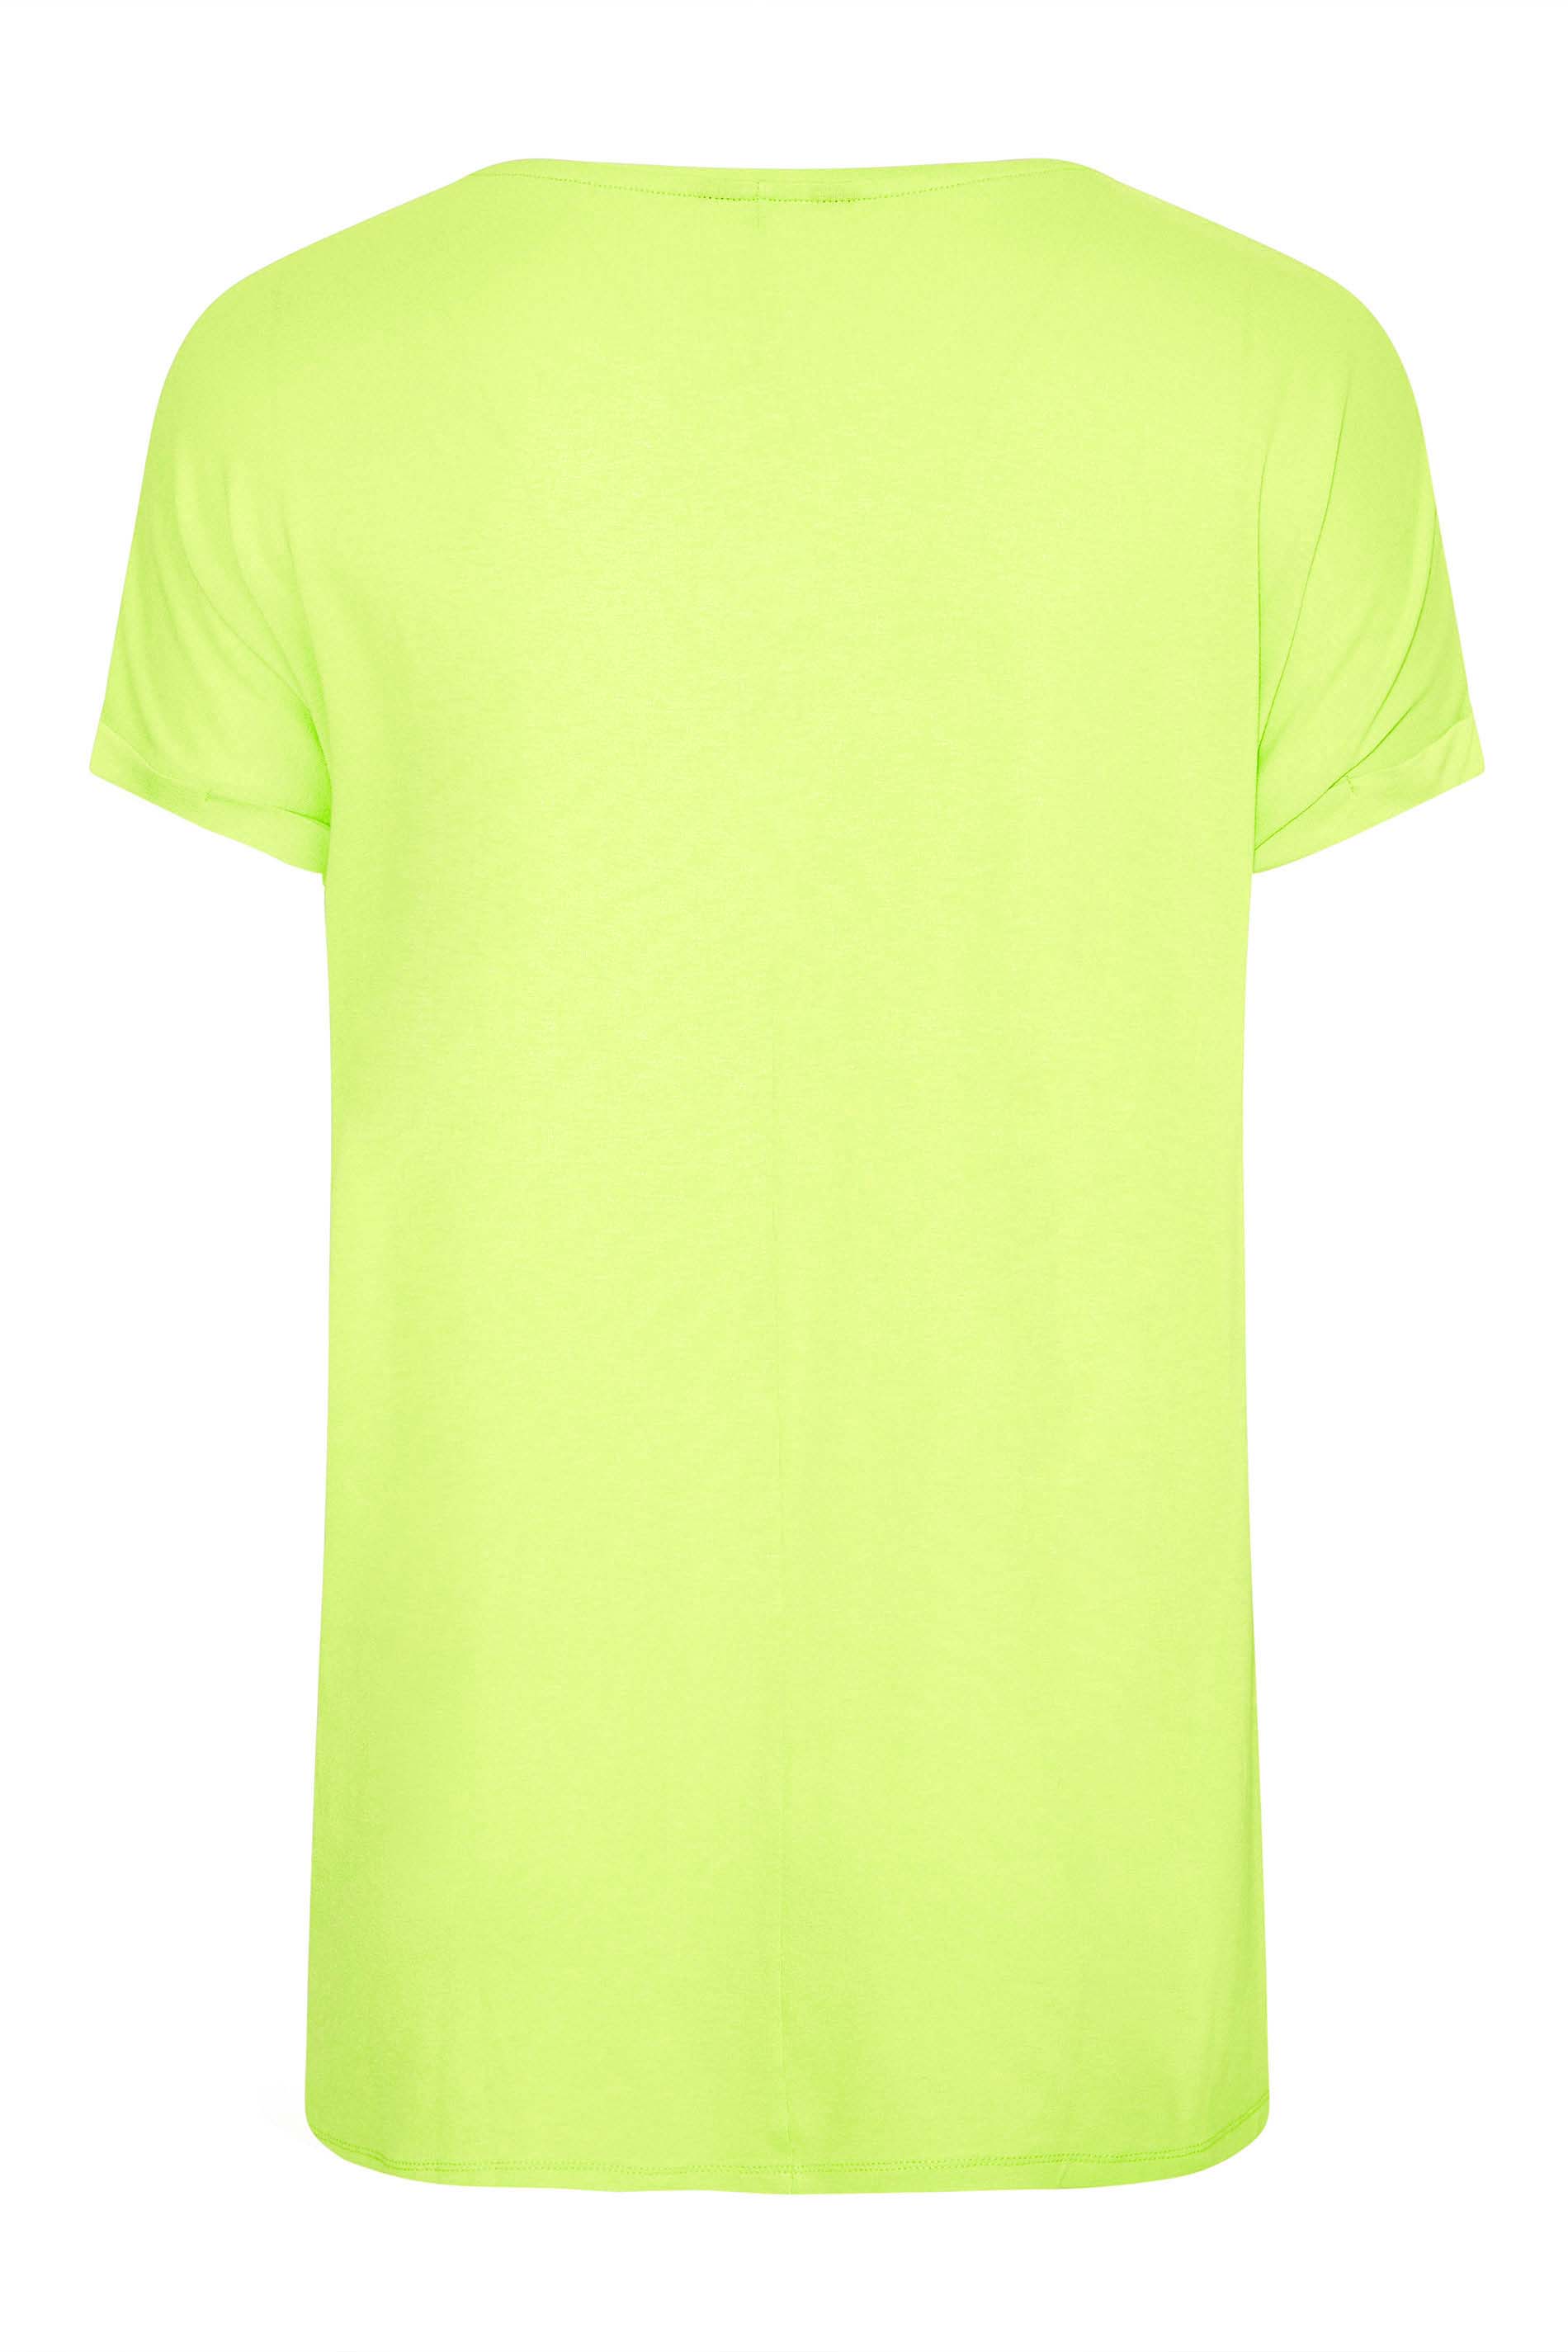 Grande taille  Tops Grande taille  Tops Jersey | T-Shirt Vert Empiècement Floral Sequins - HR16271